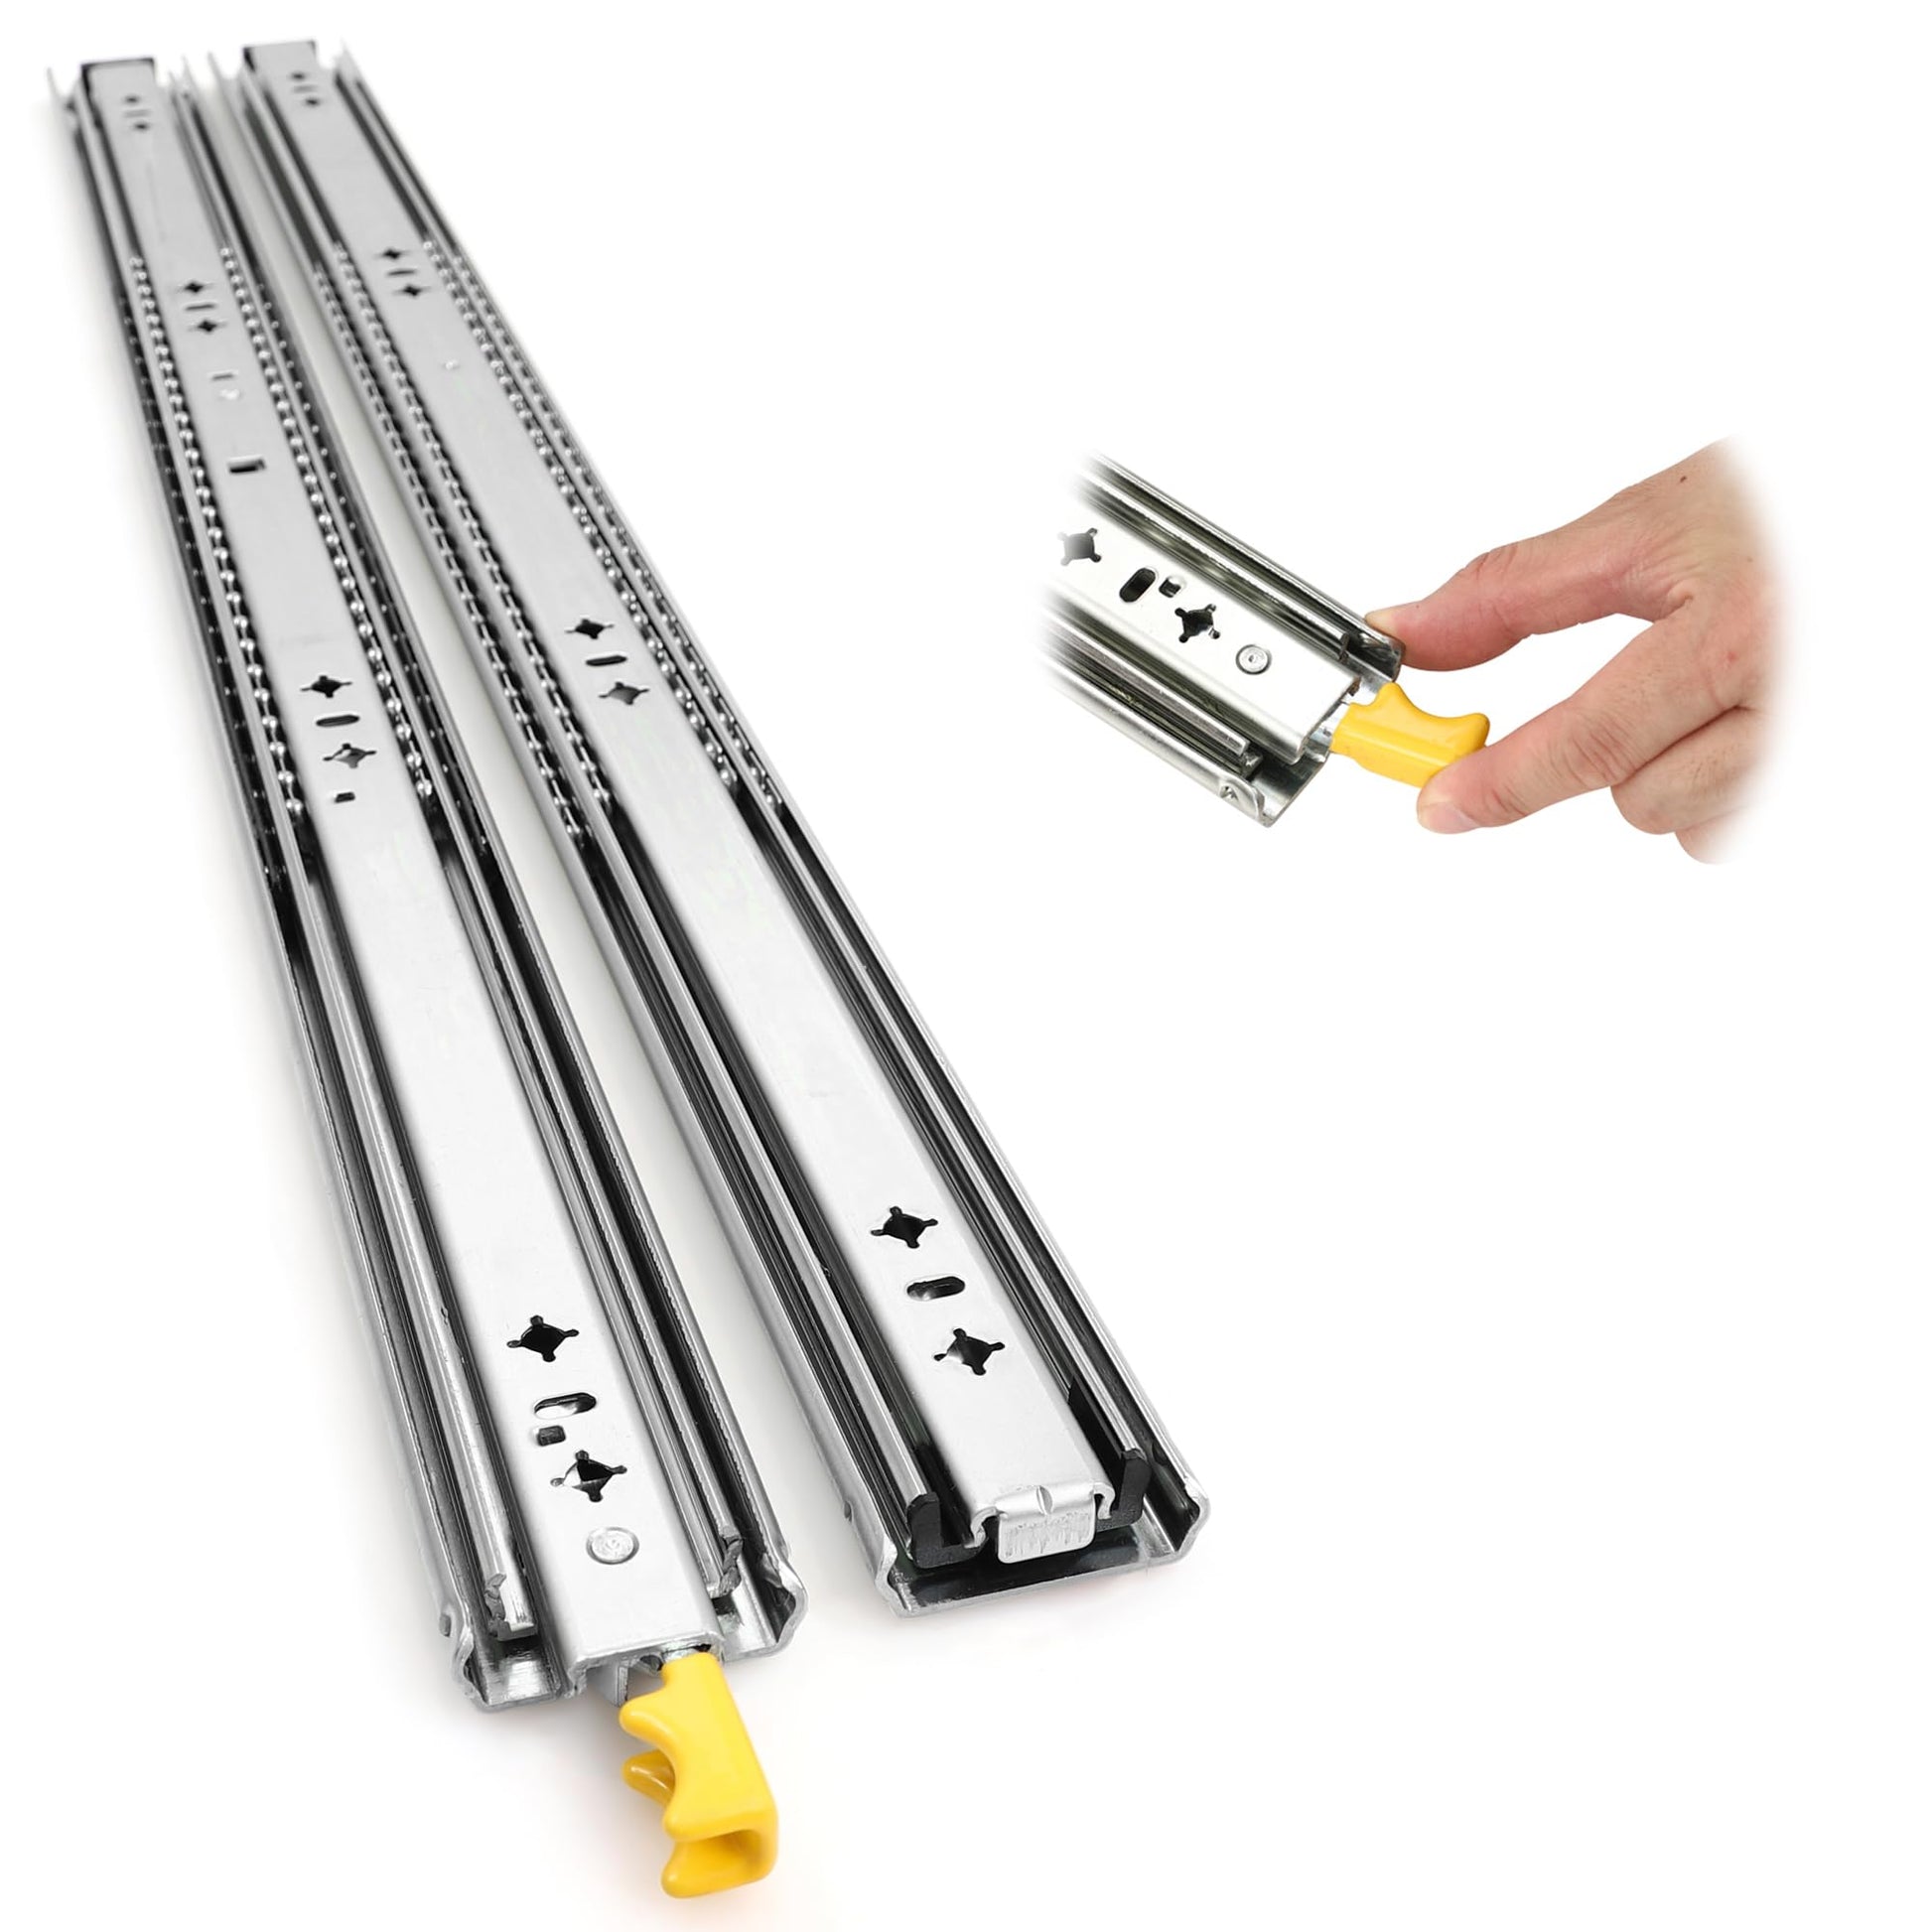 250 Lbs Capacity, 3-Fold Full Extension Drawer Slides Lock